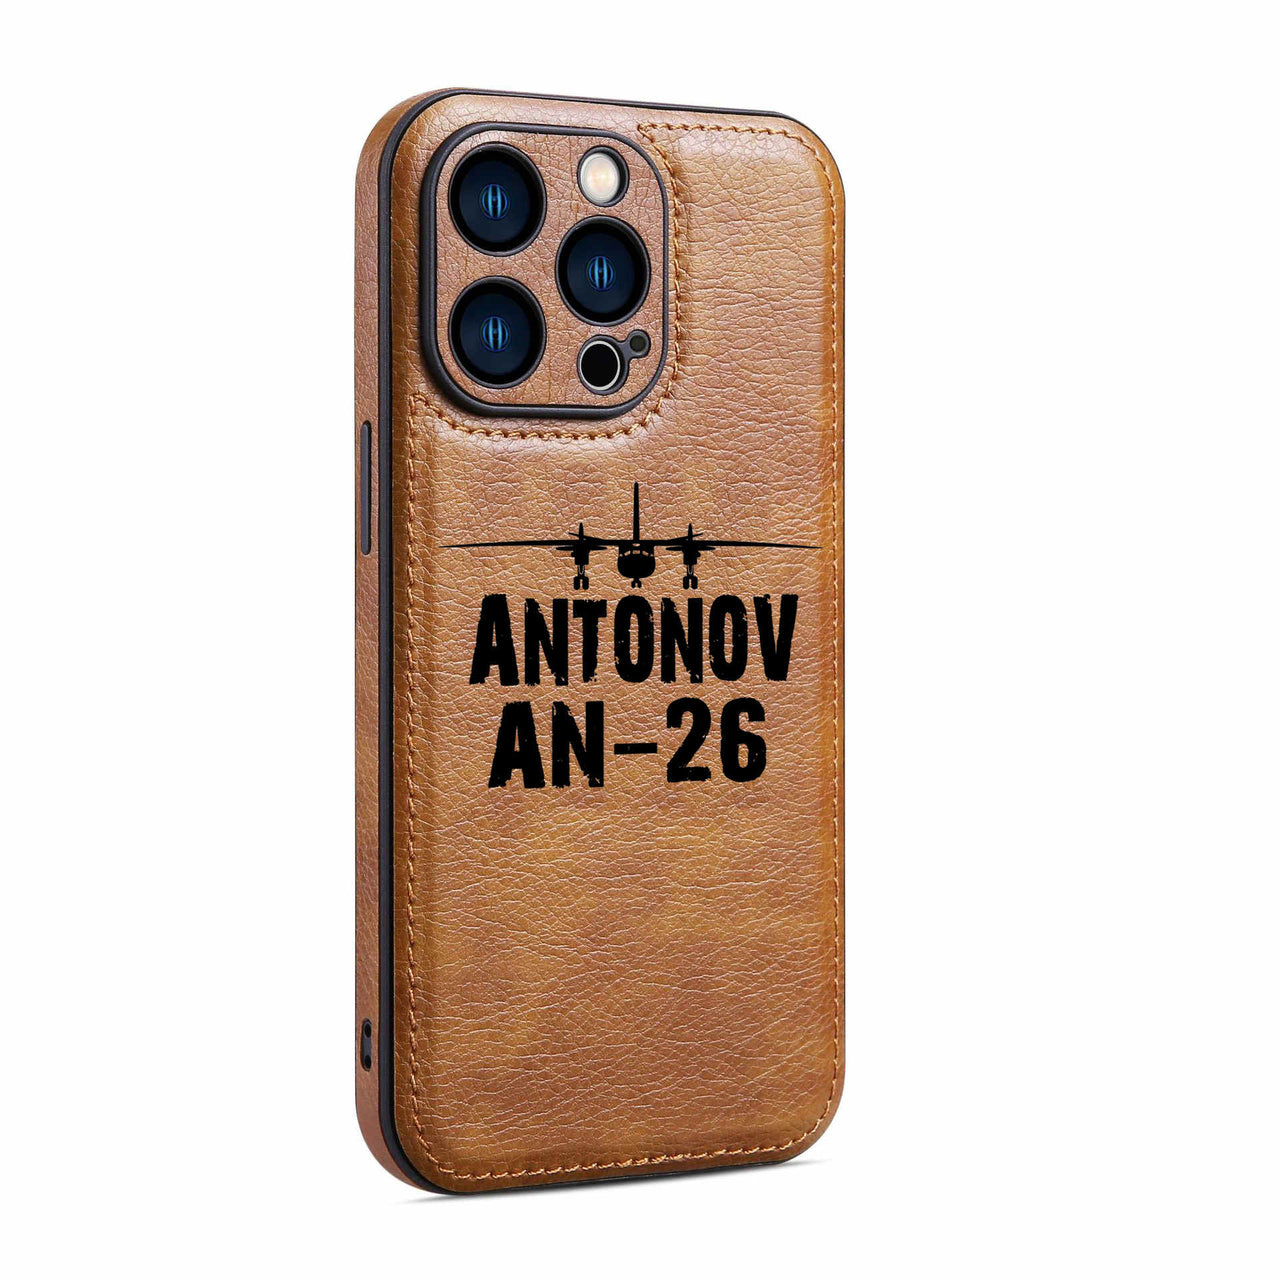 Antonov AN-26 & Plane Designed Leather iPhone Cases